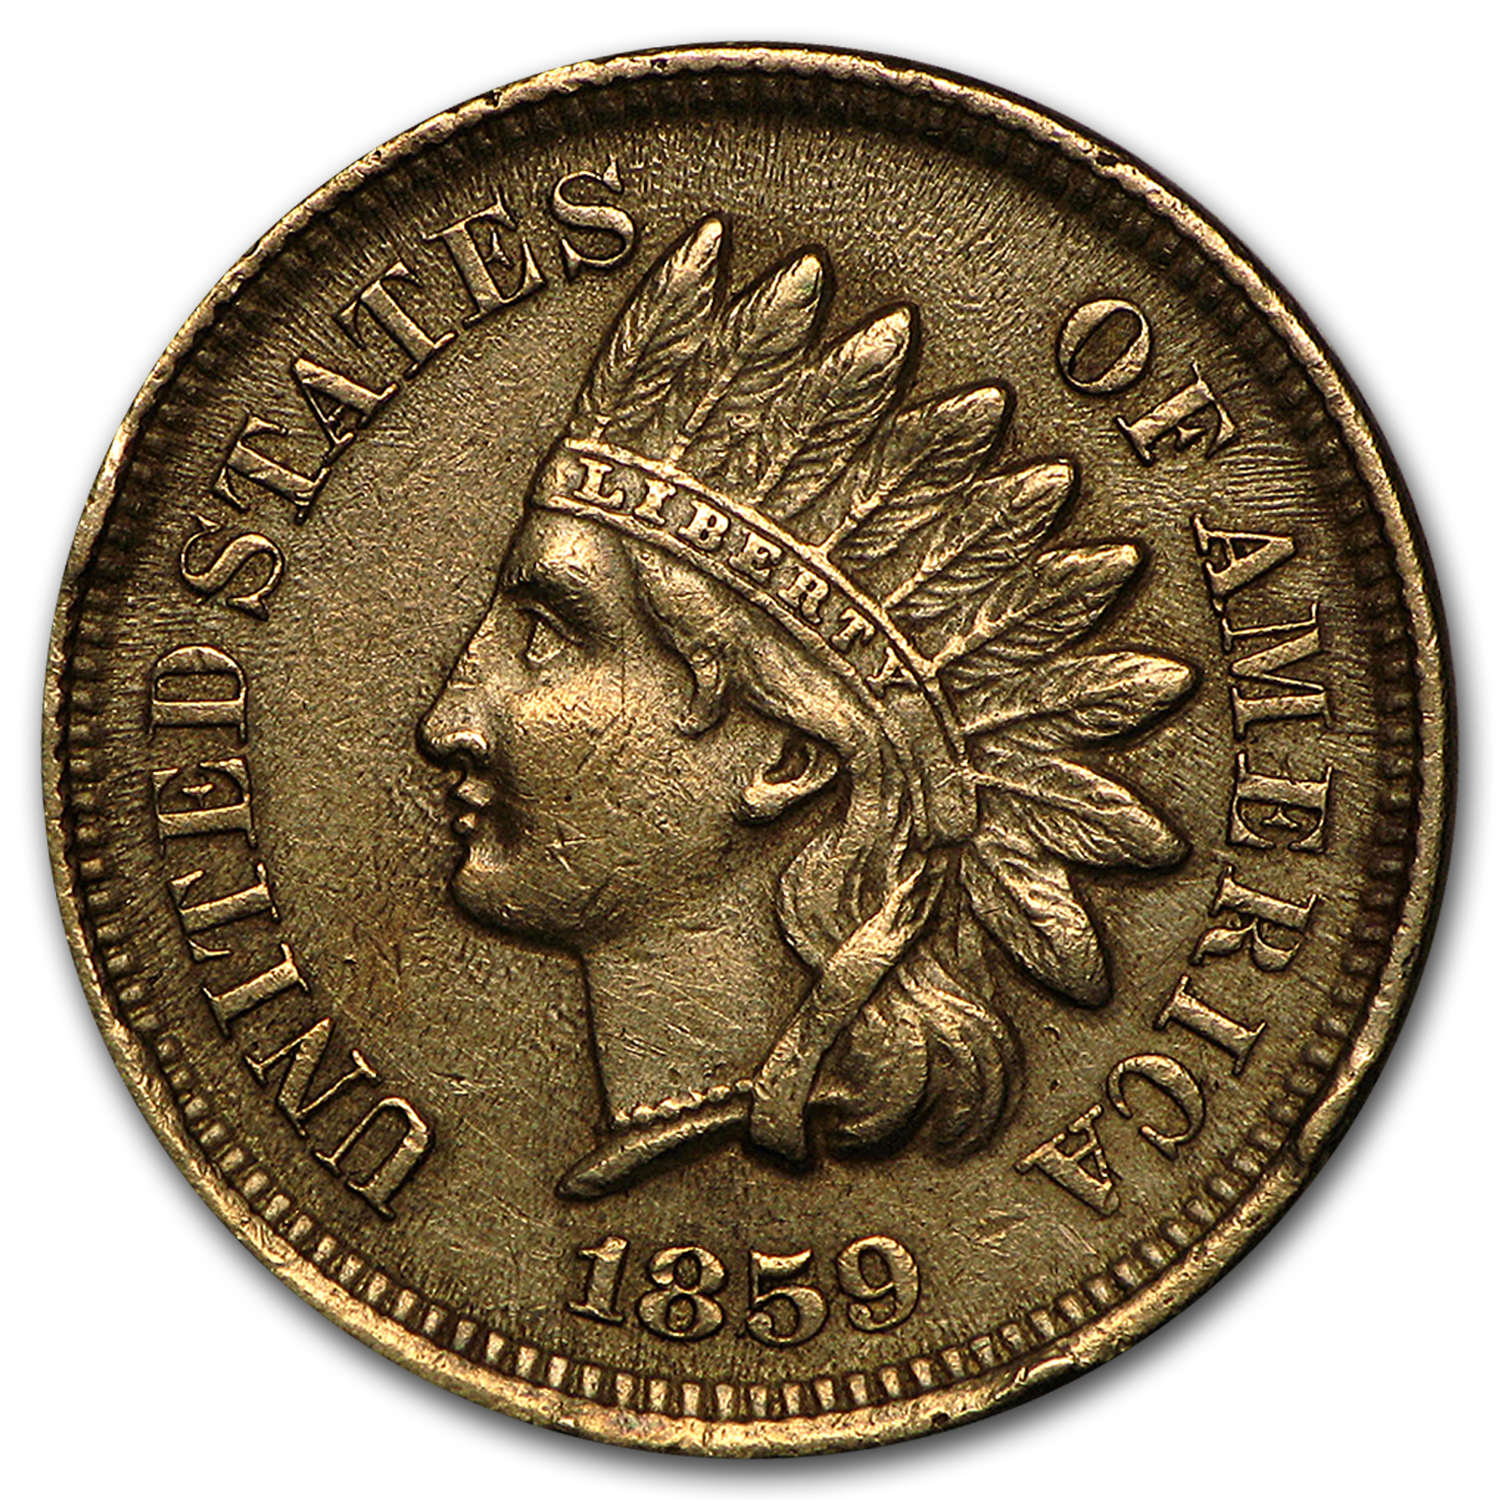 Buy 1859 Indian Head Cent AU